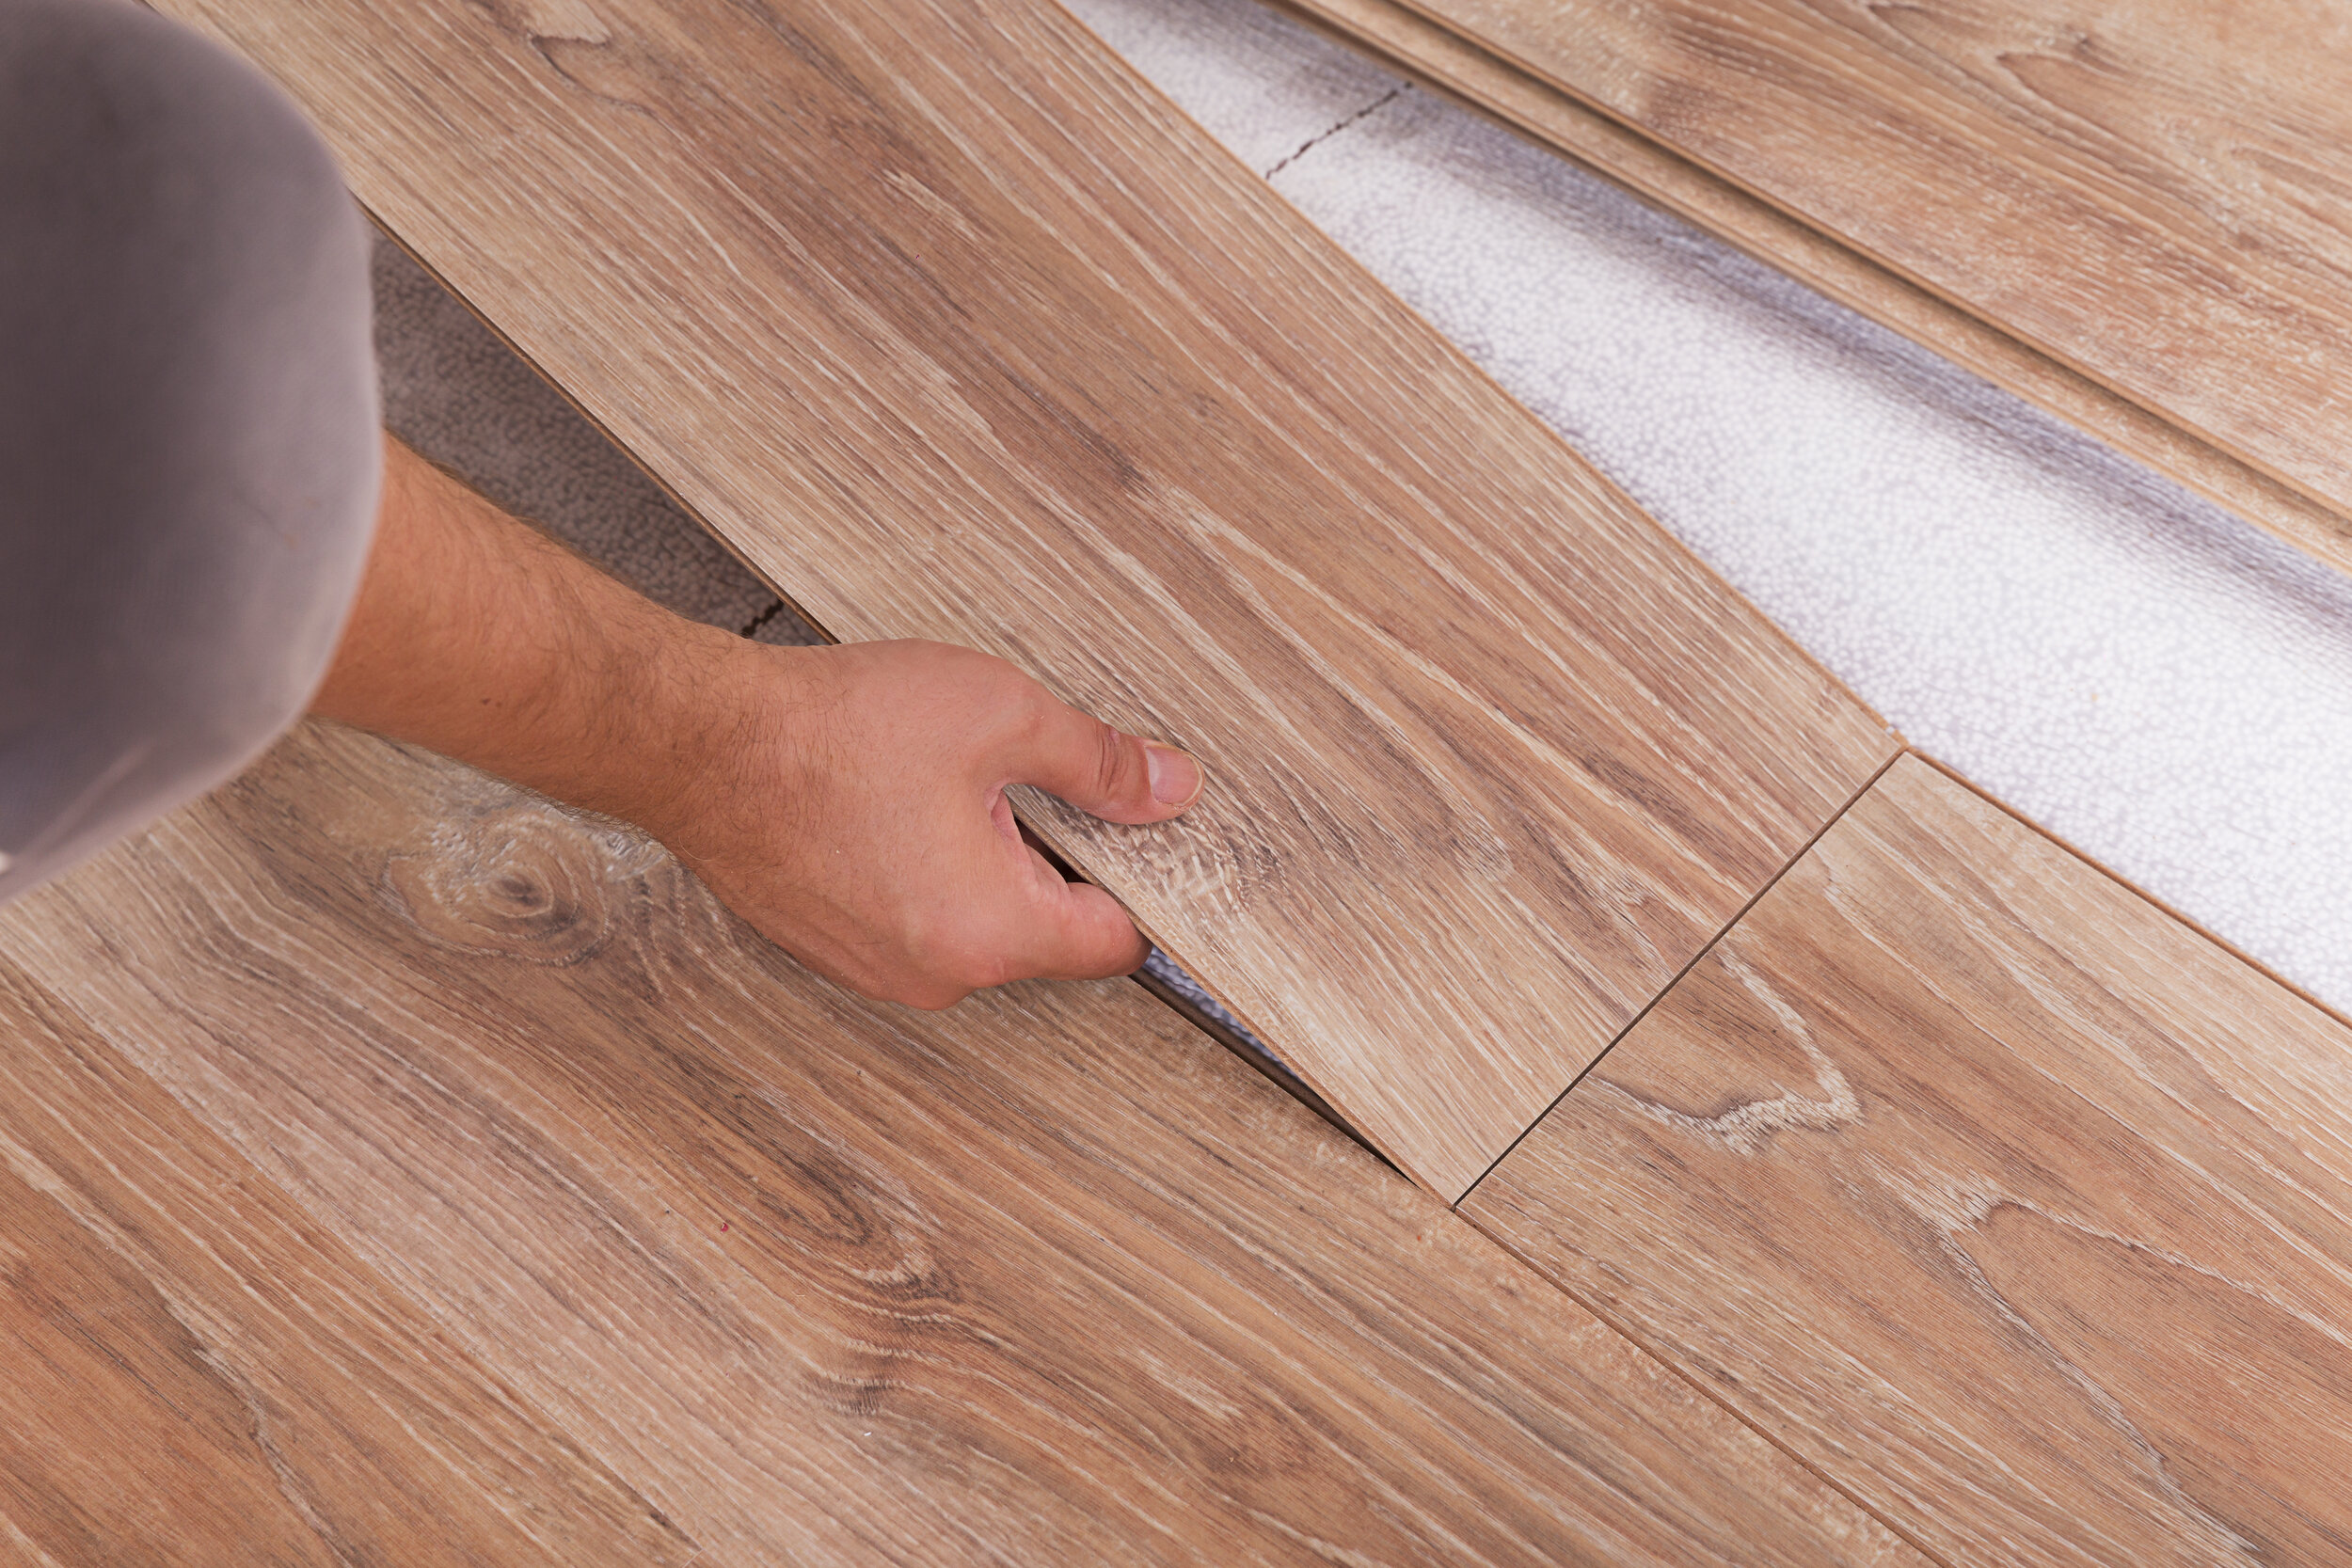 Waterproof Laminate Flooring, Should I Seal My Laminate Floor